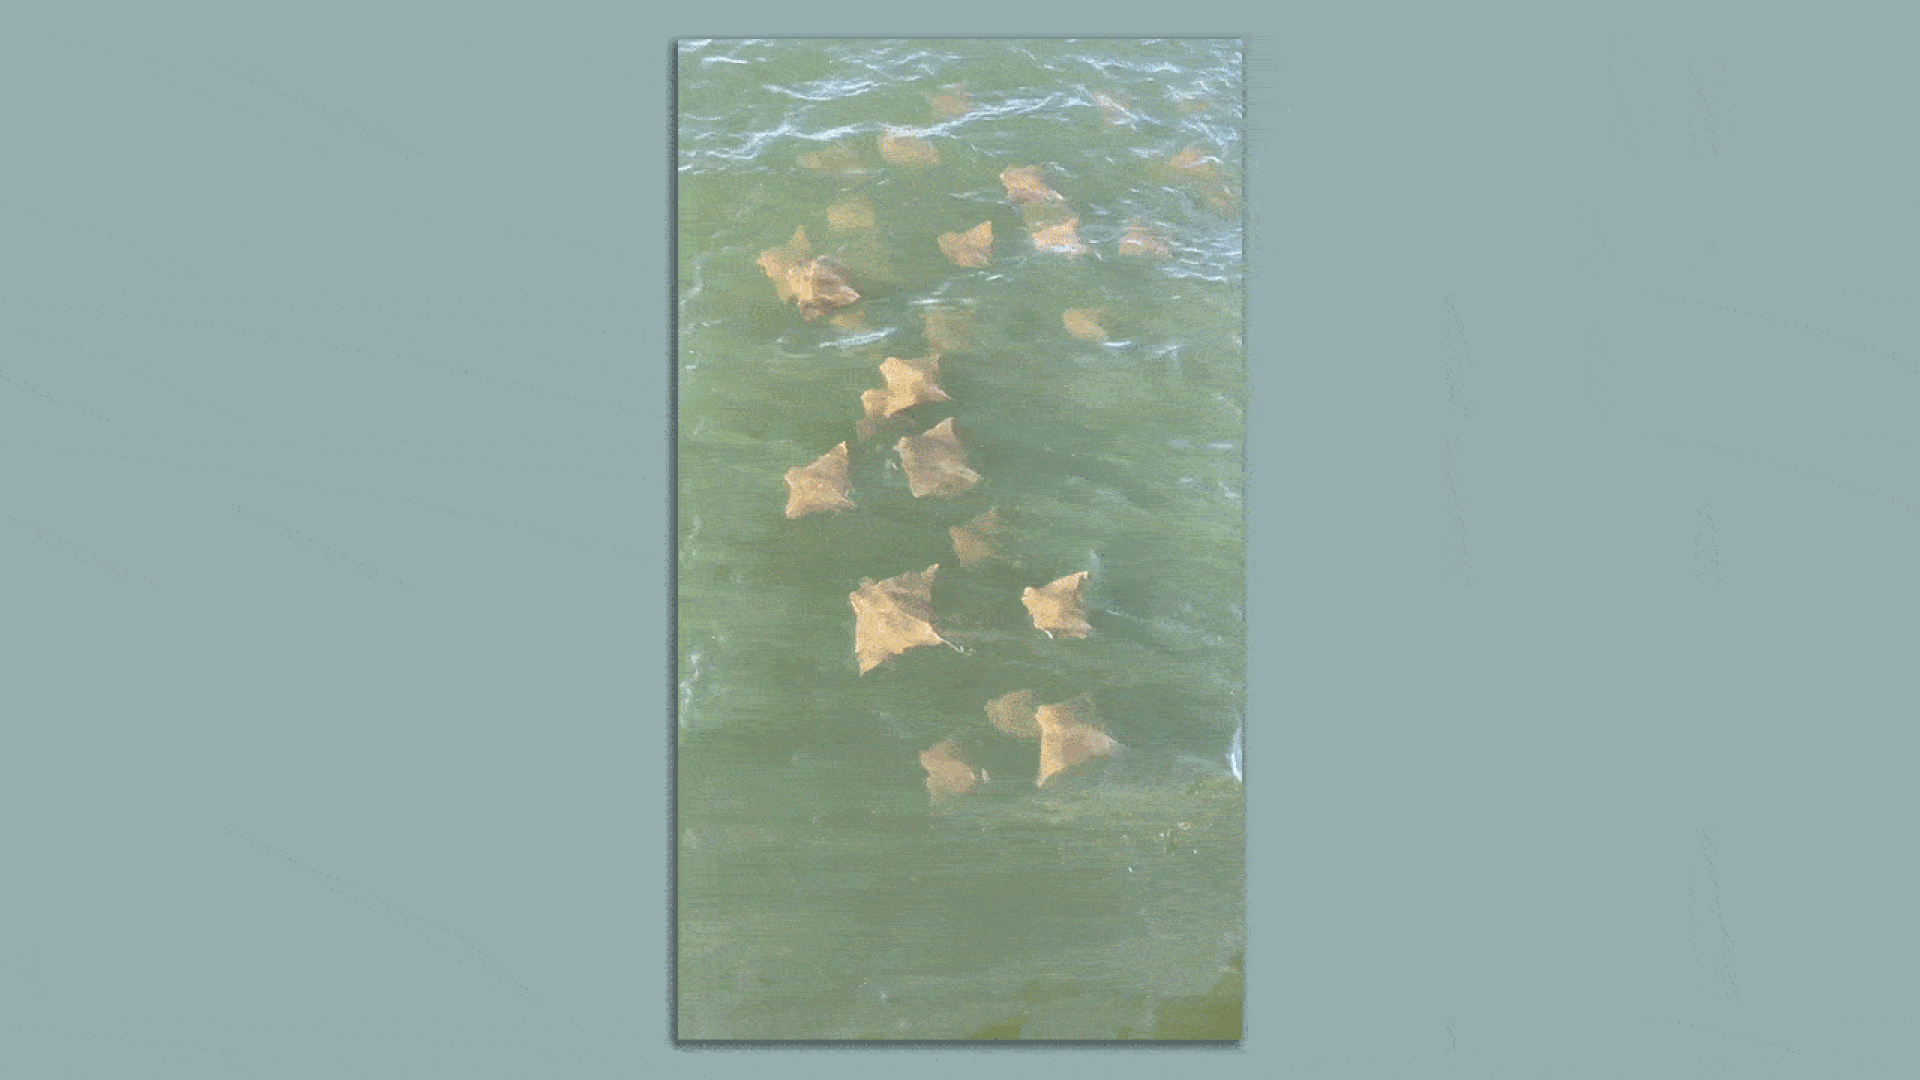 A gif of swimming stingrays.